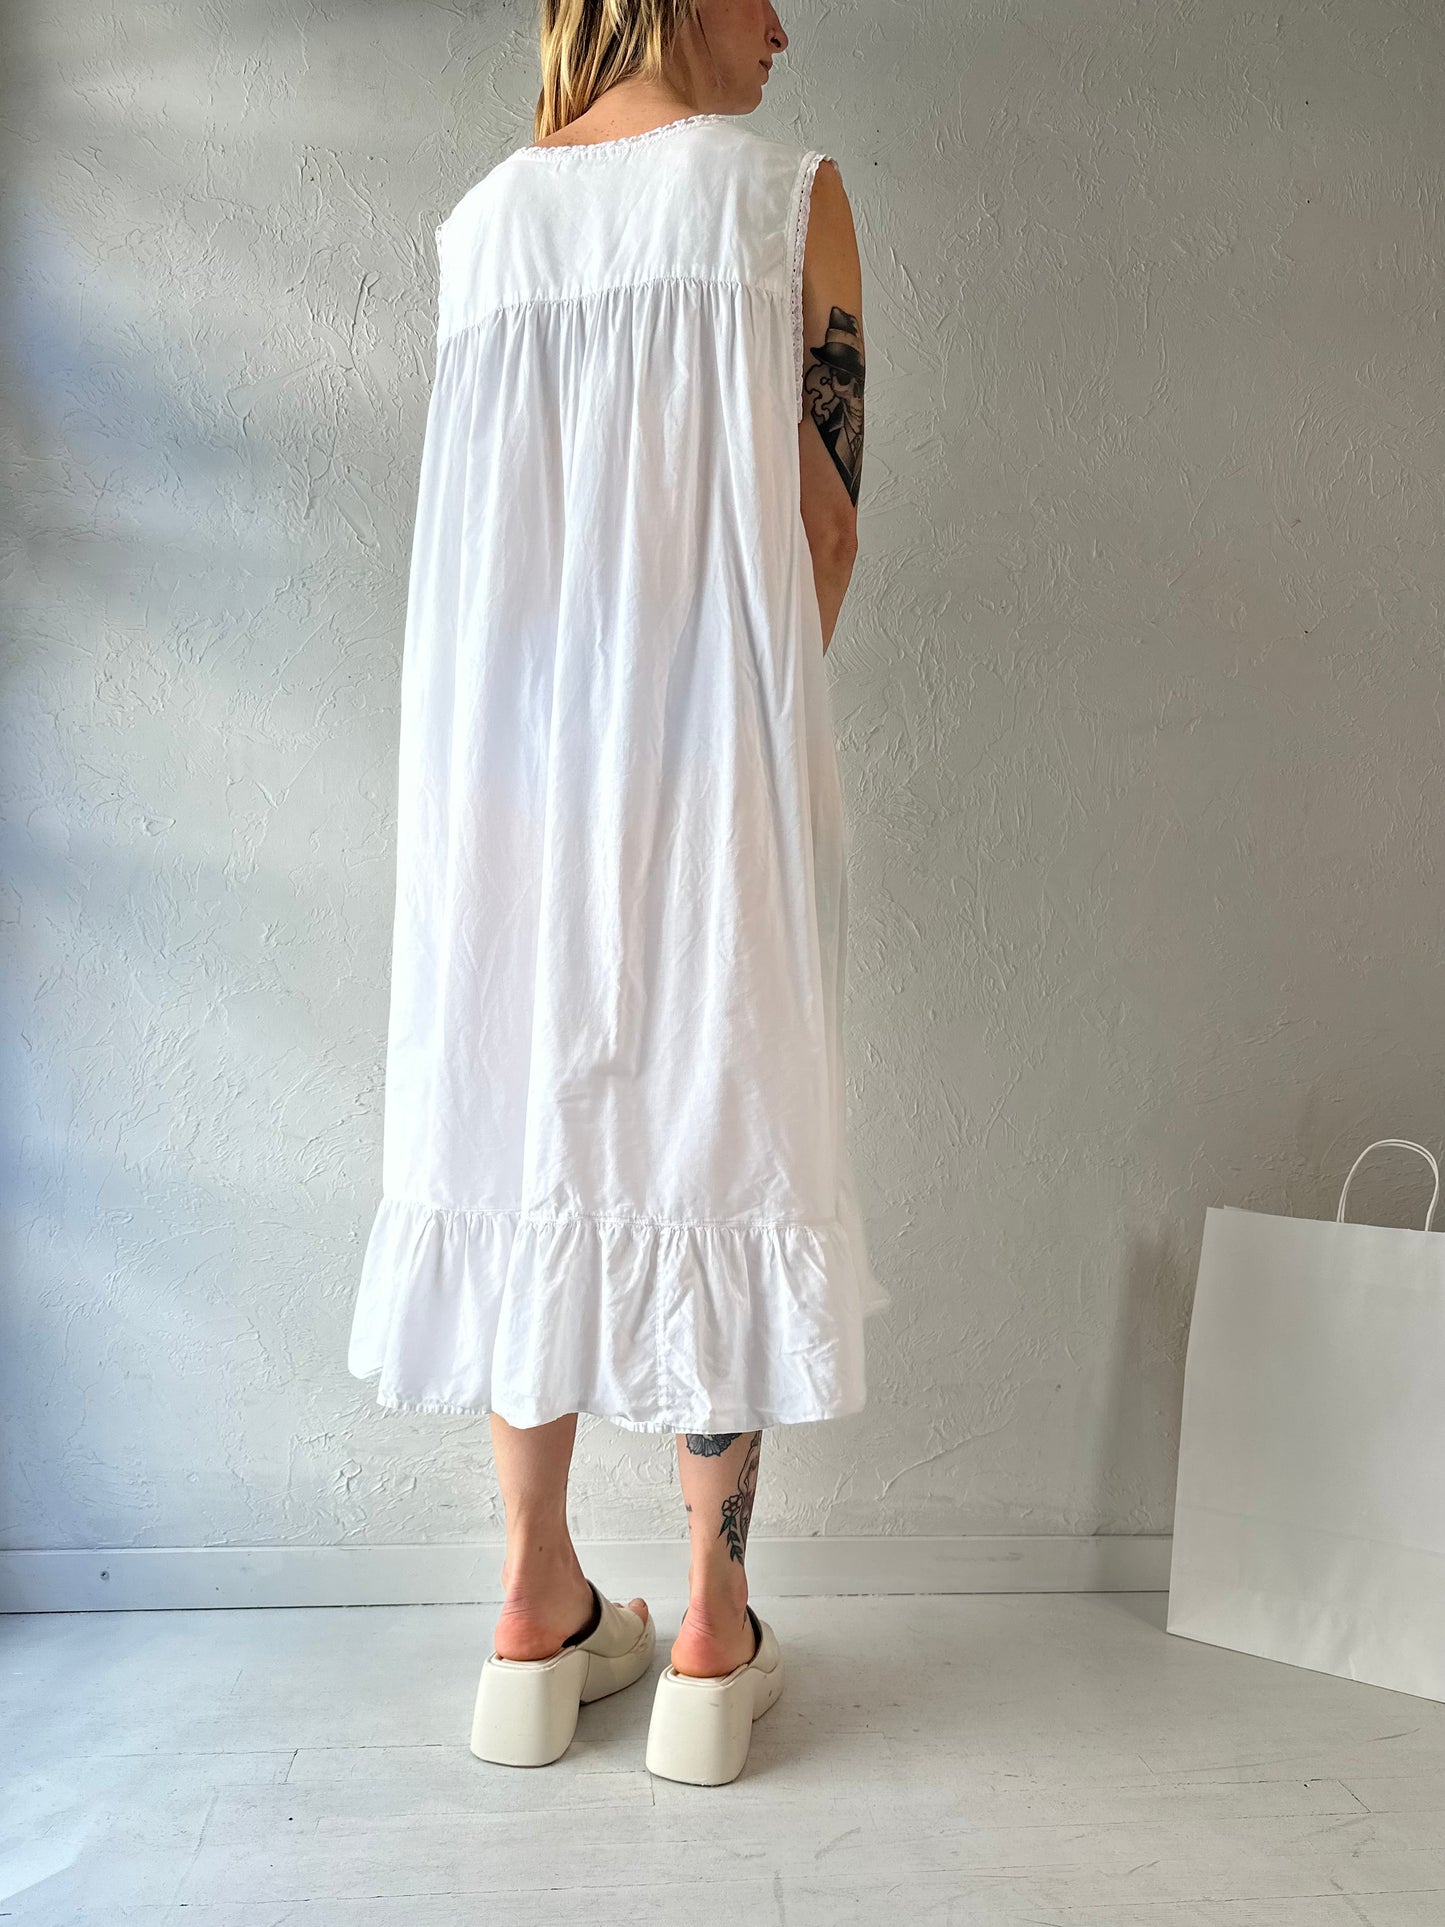 90s 'Gloria Vanderbilt' White Cotton Maxi Dress / Large